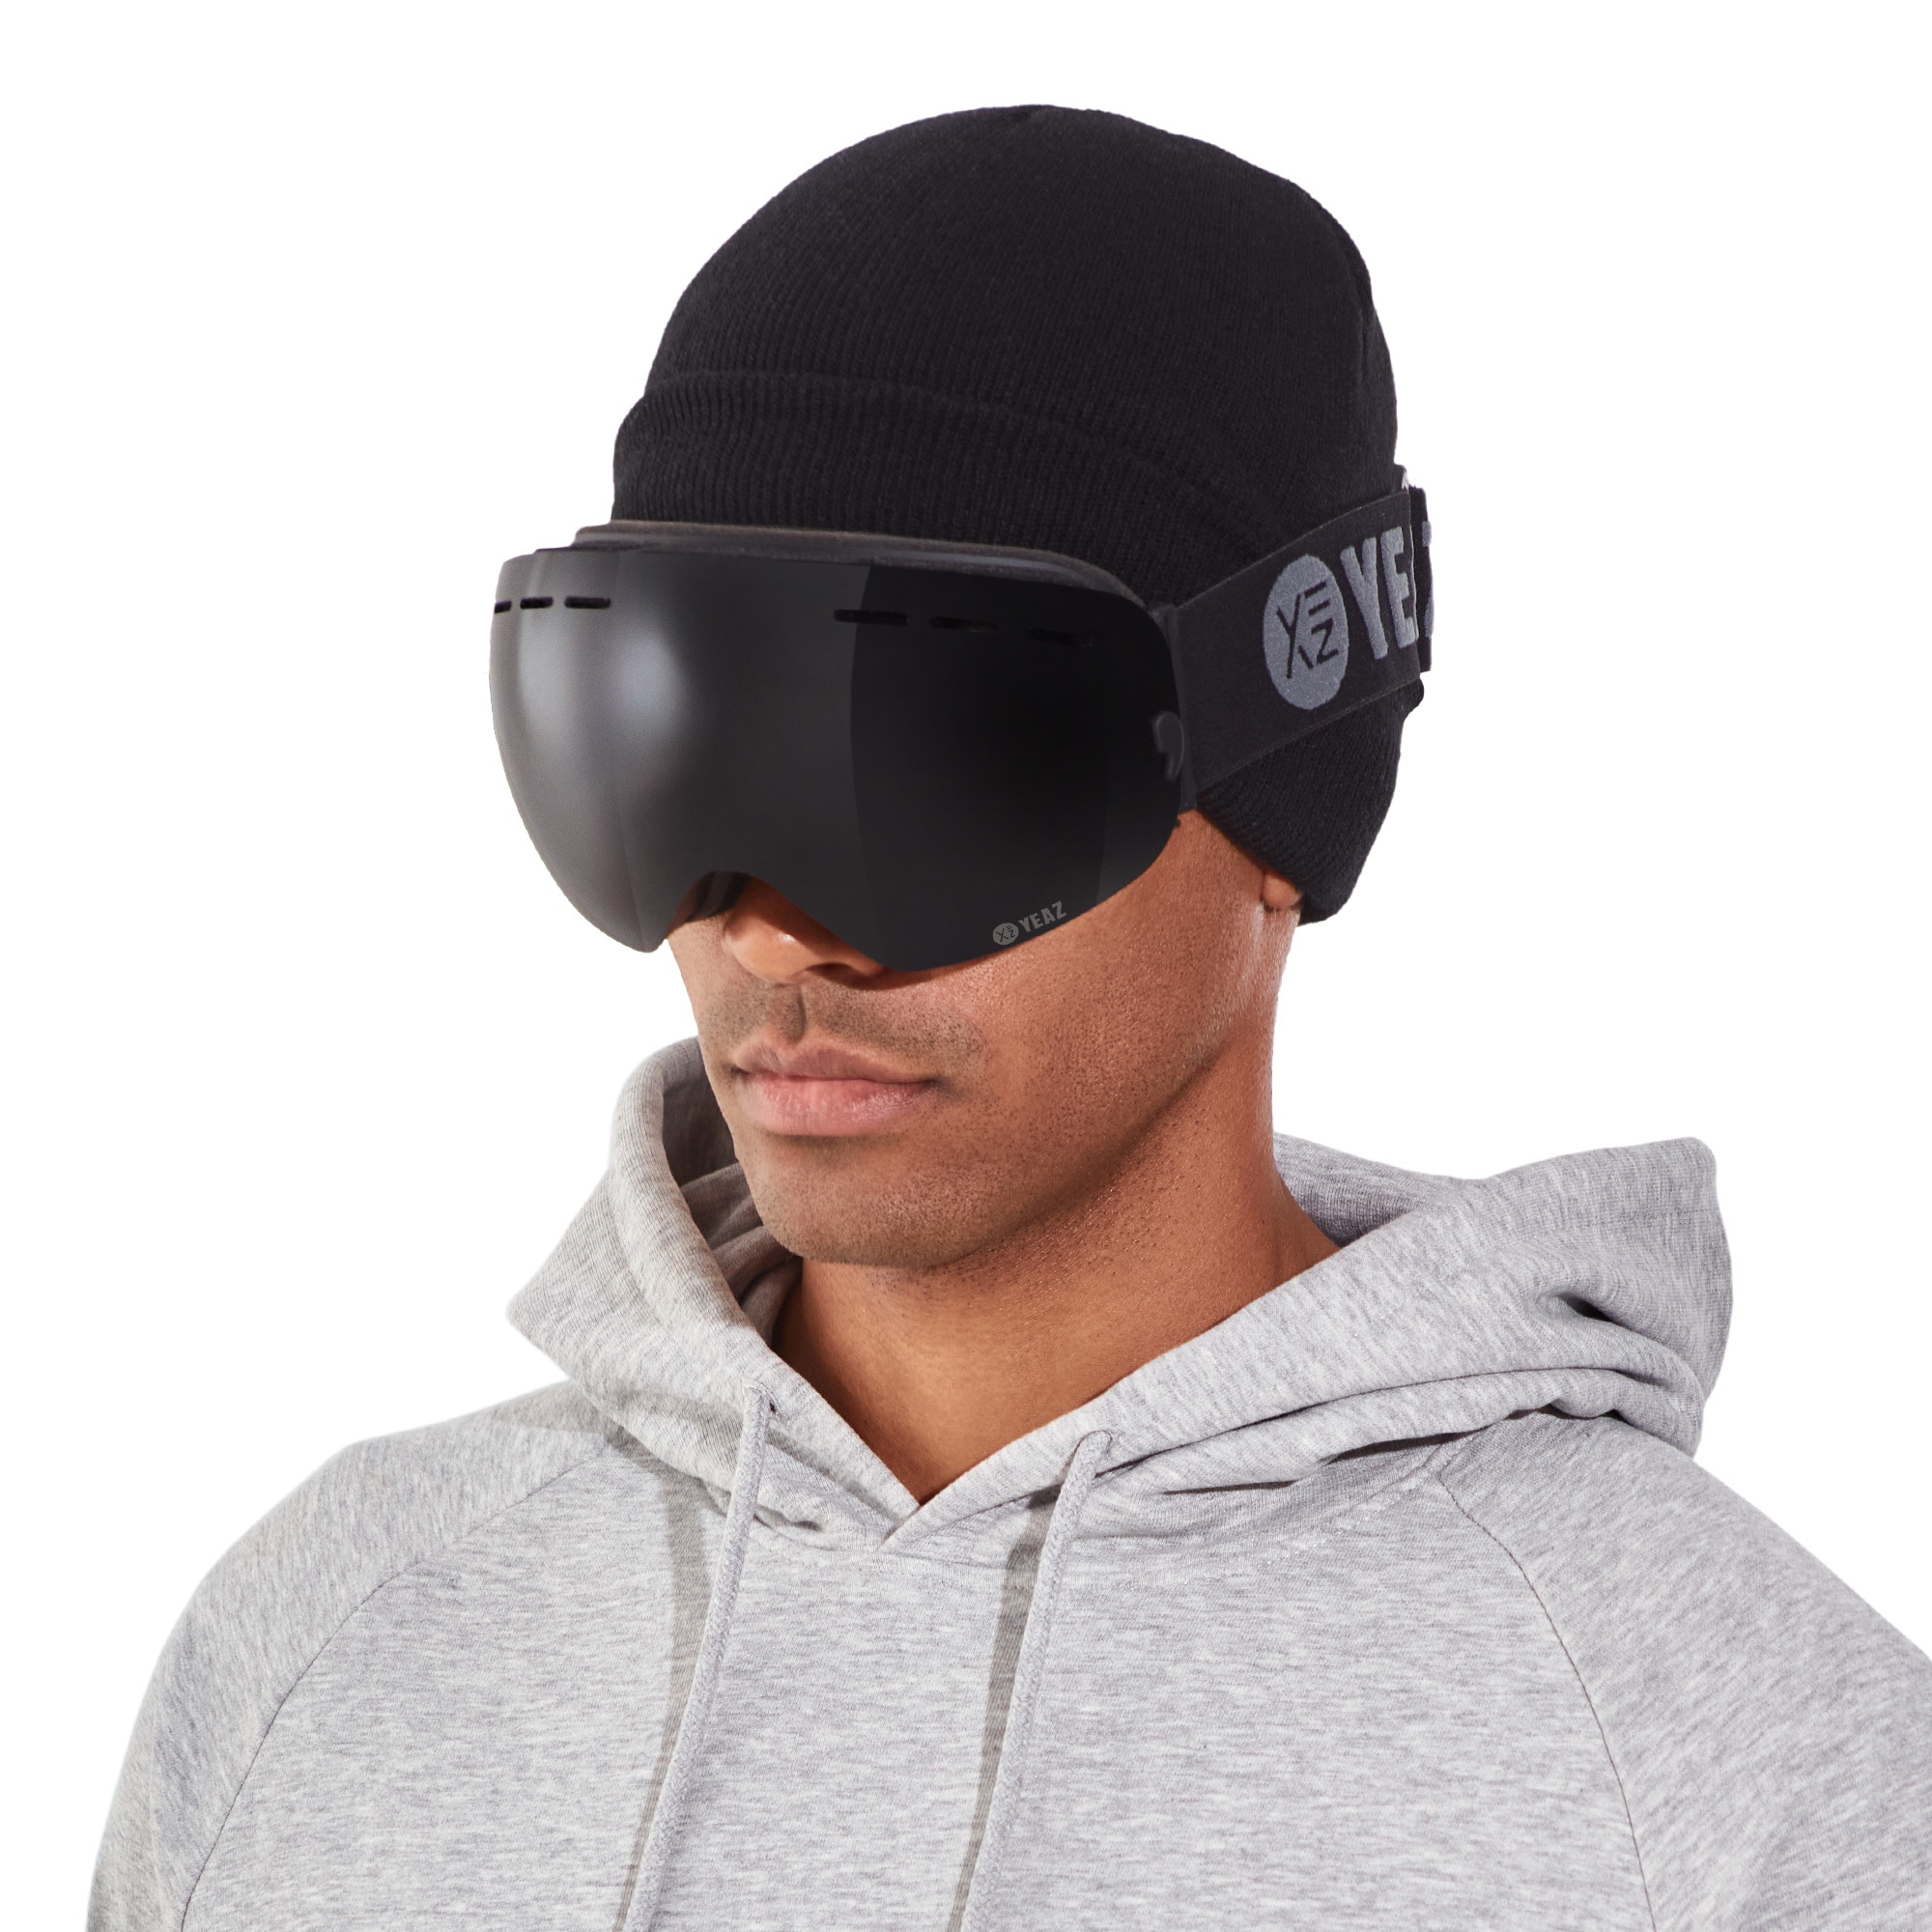 YEAZ Snowboardbrille »Ski- Snowboardbrille ohne Rahmen schwarz XTRM-SUMMIT«